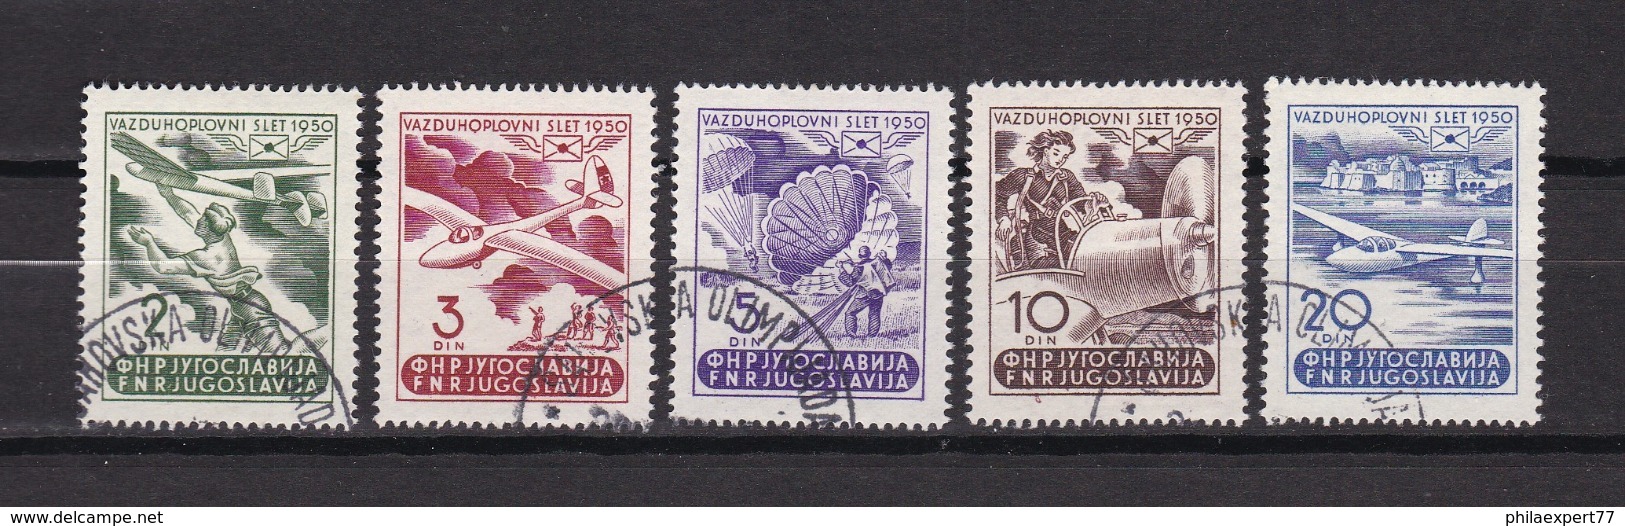 Jugoslawien - 1950 - Michel Nr. 611/615 - Gest. - 45 Euro - Gebraucht